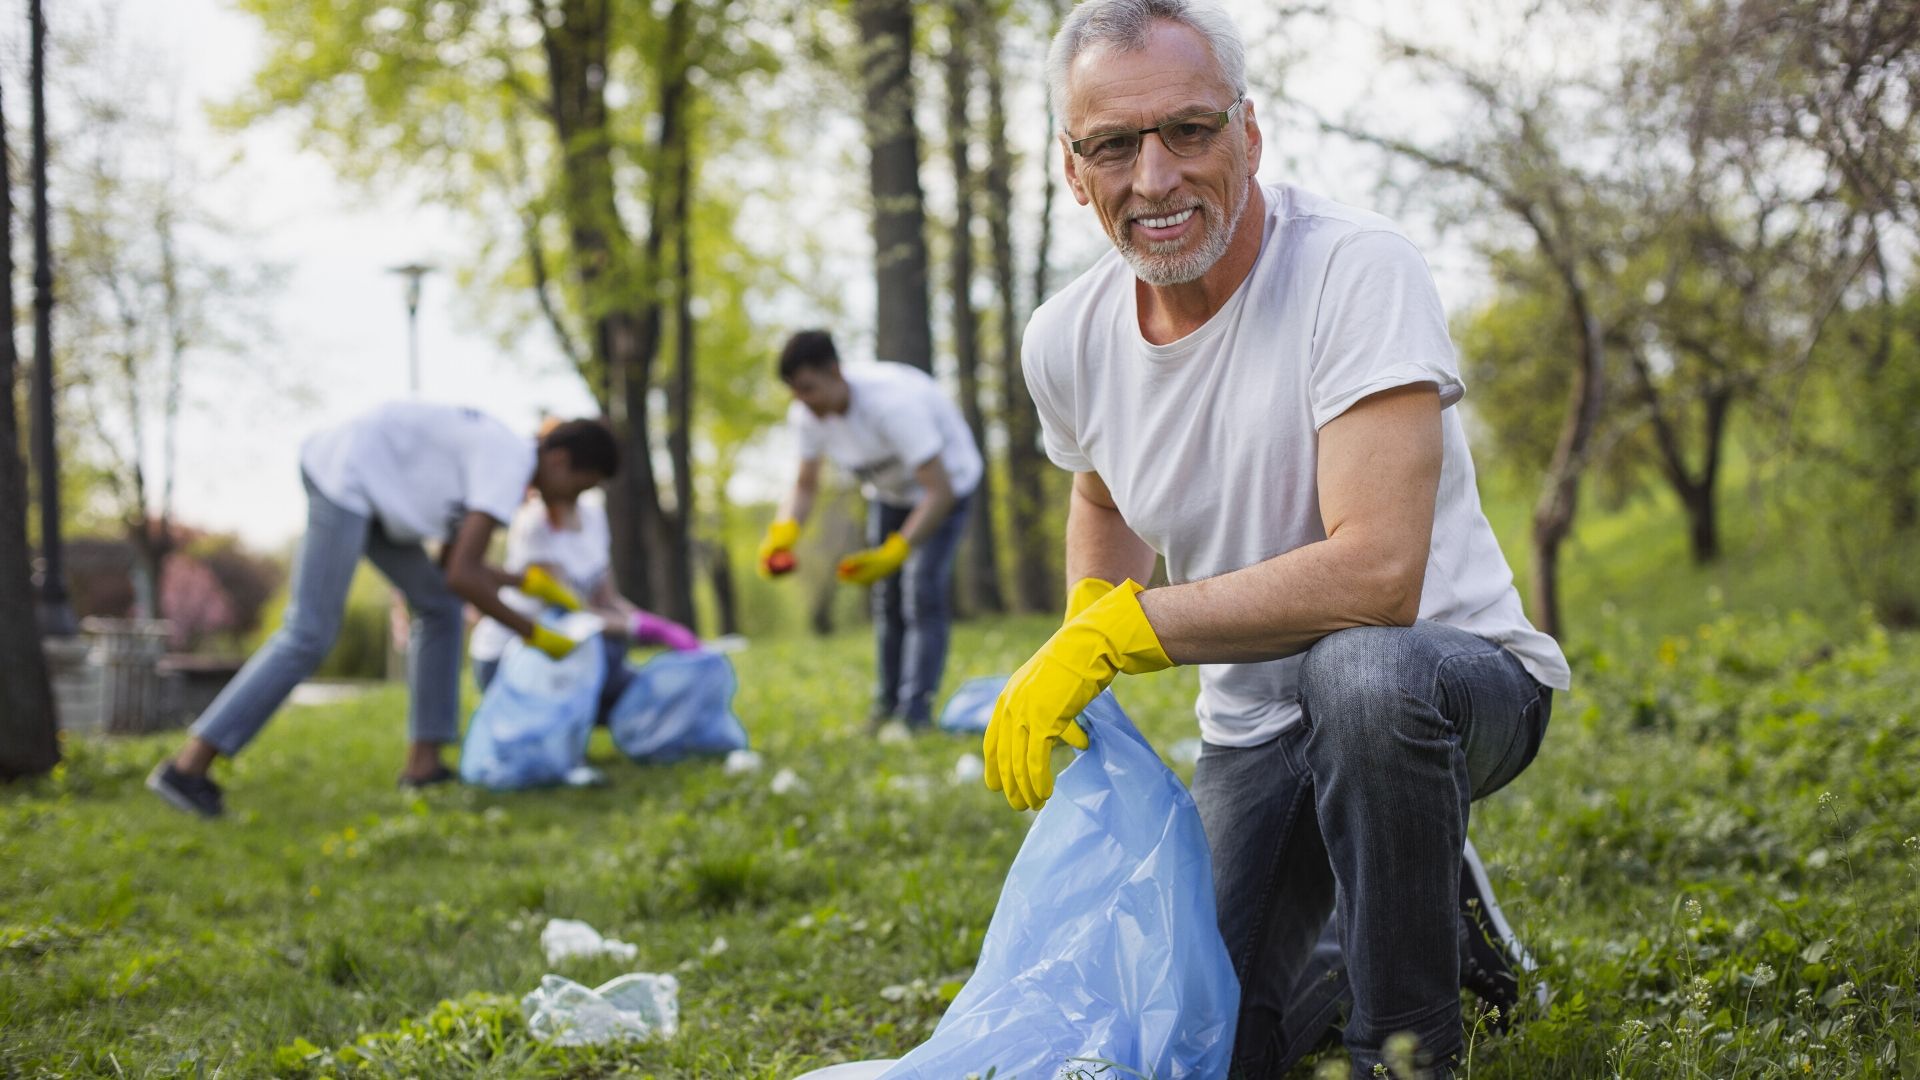 9 Benefits of Volunteering for Older Adults